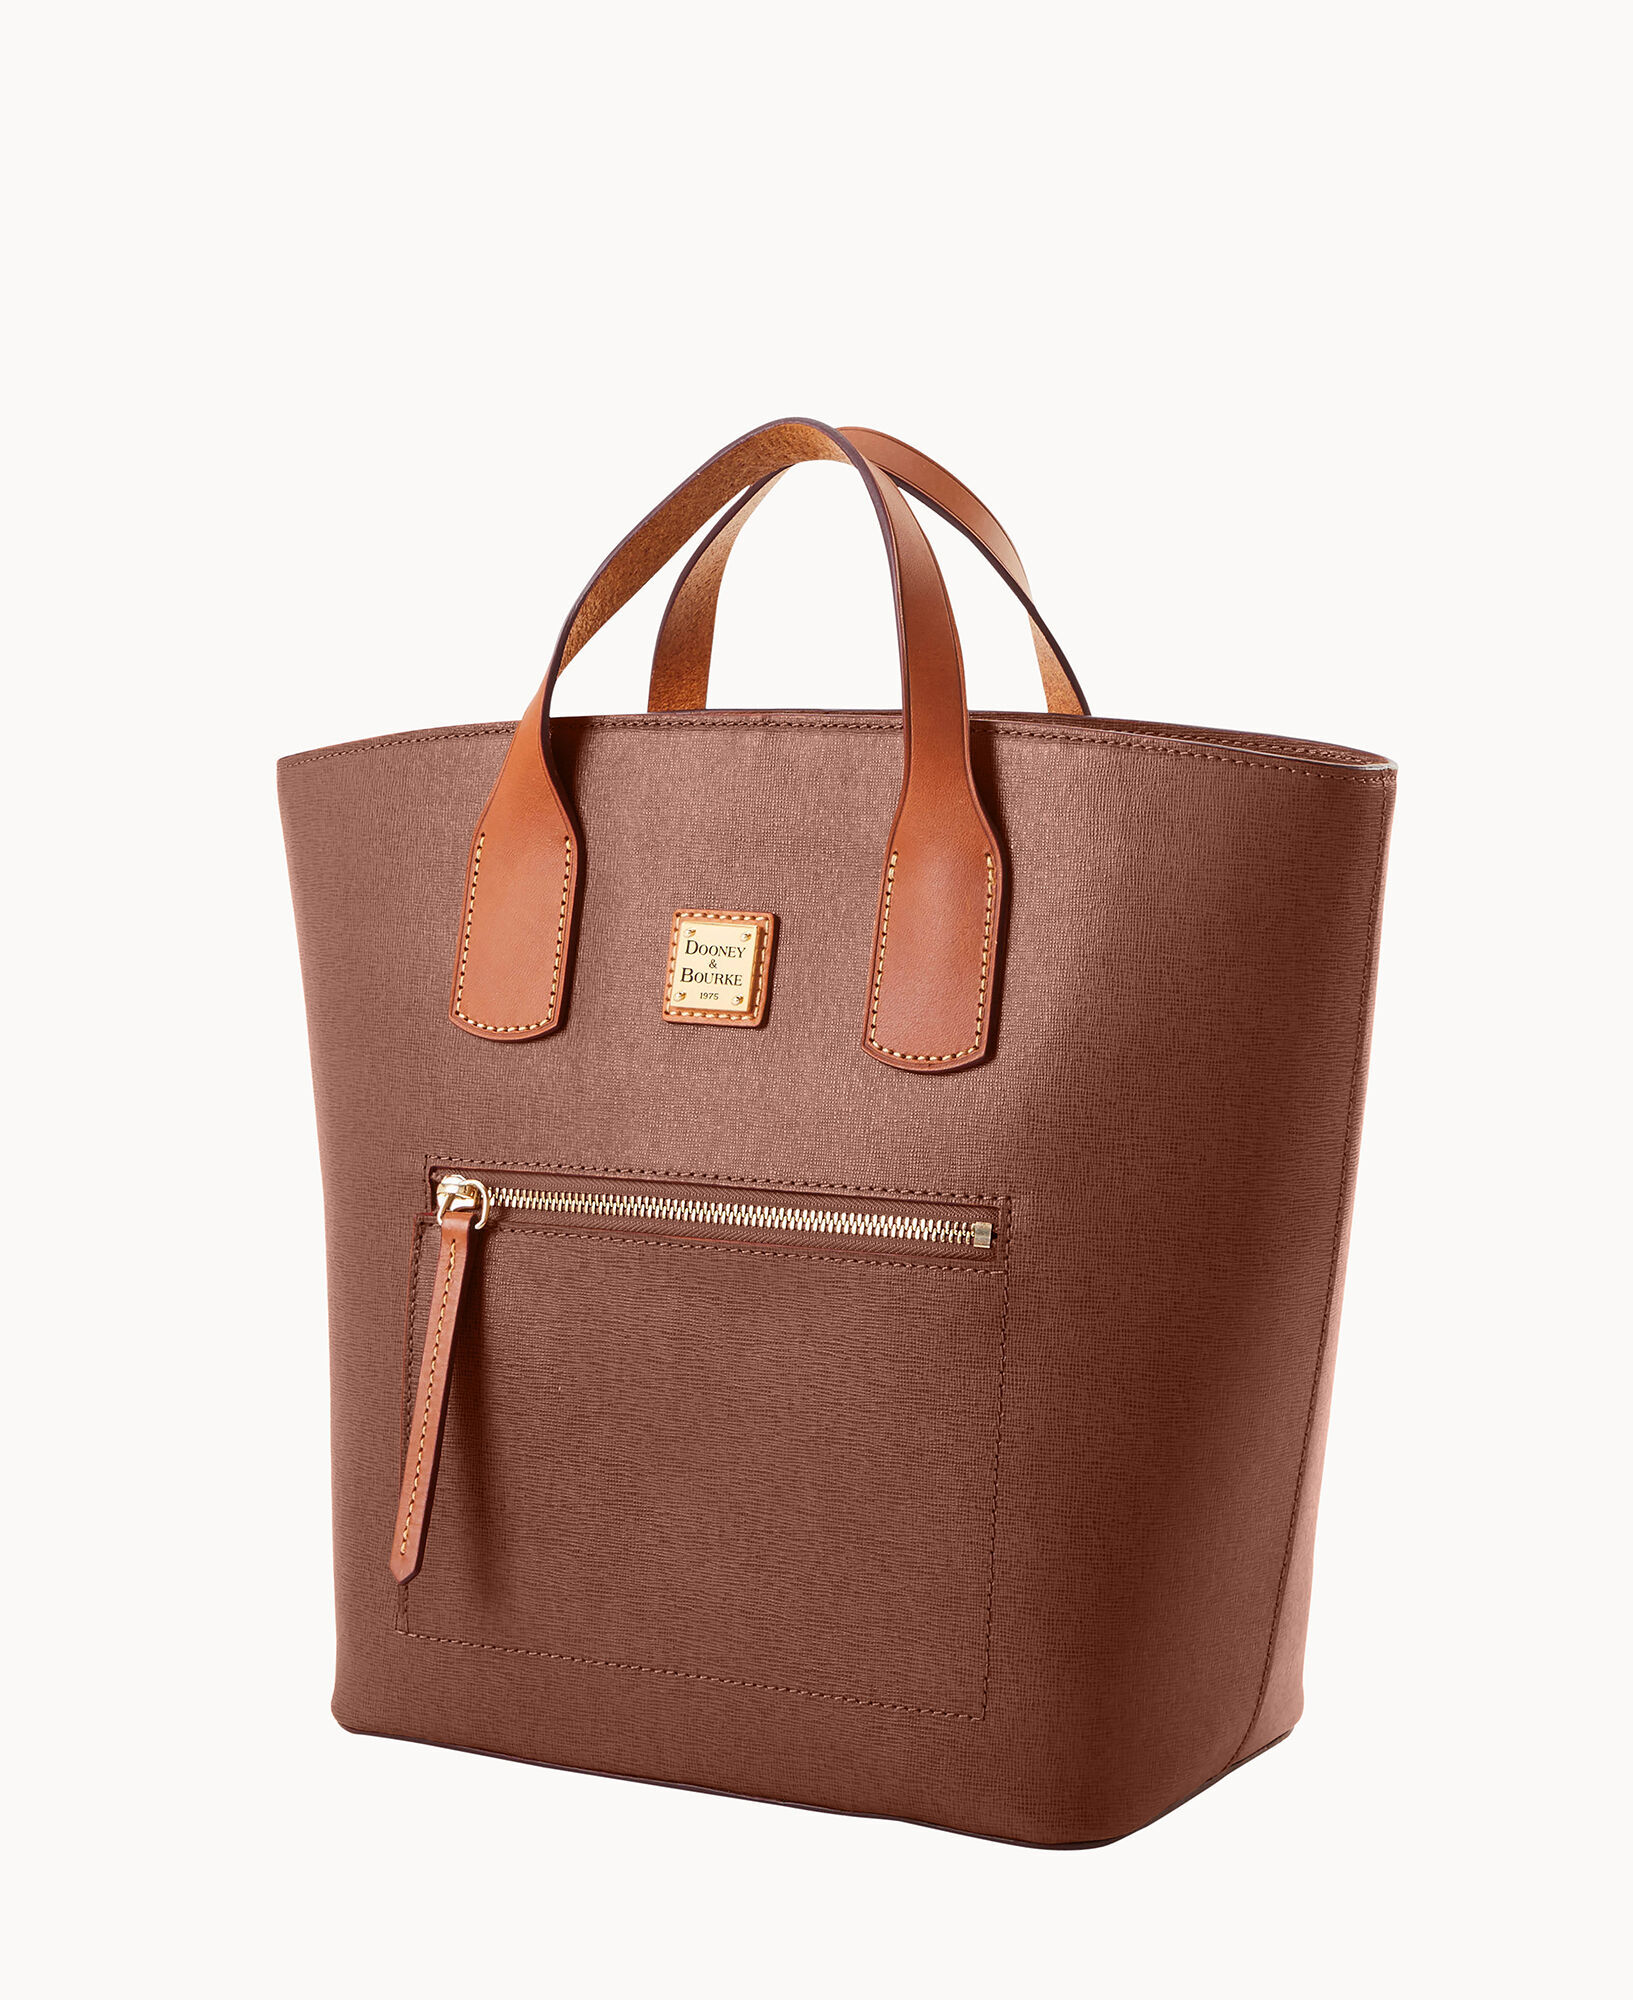 Dooney & Bourke Darla Shopper Handbag